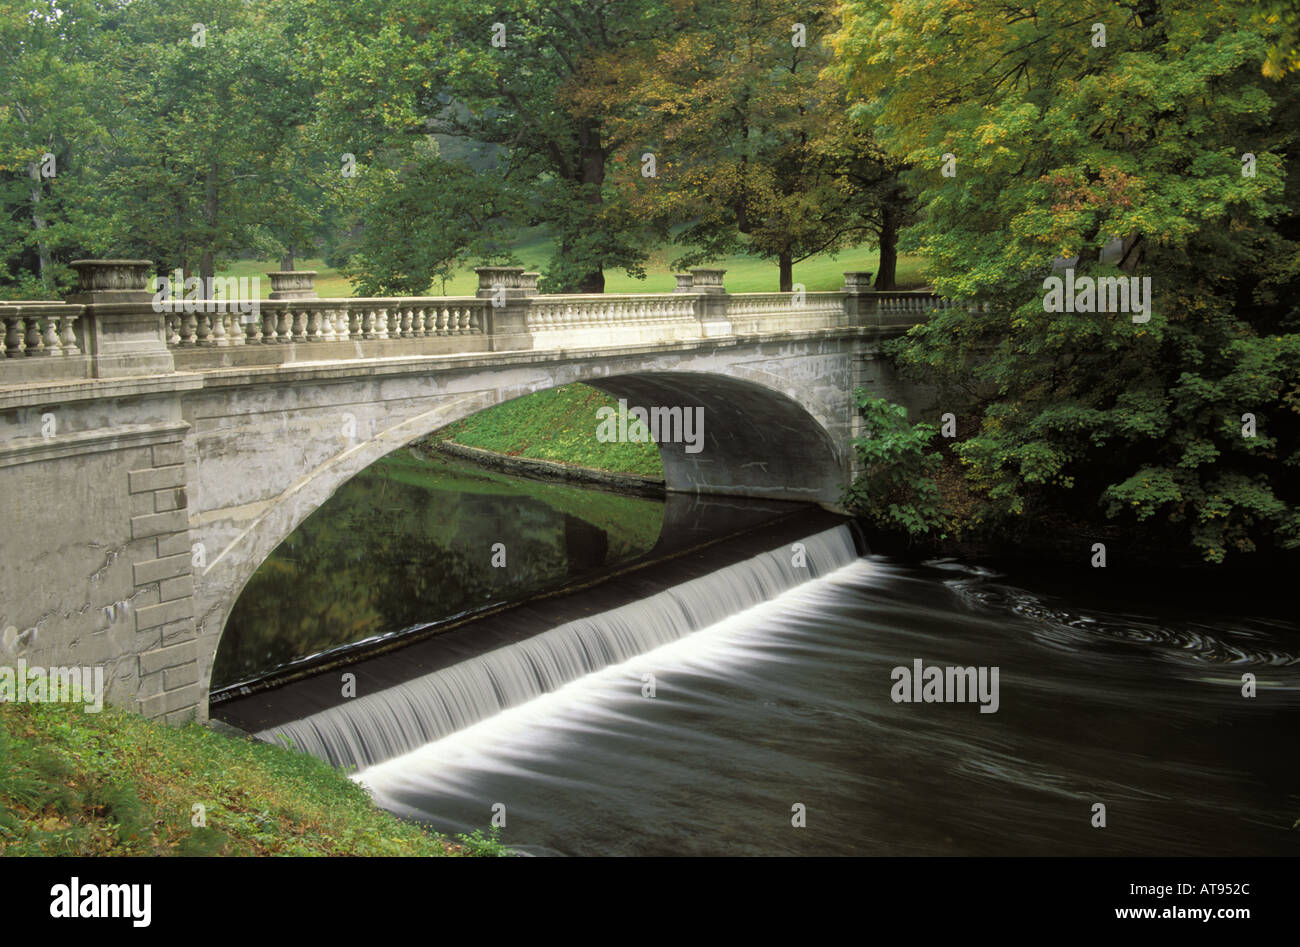 White Bridge over Crum Elbow Creek Vanderbilt Mansion National Historic Site Hyde Park Dutchess County New York Stock Photo